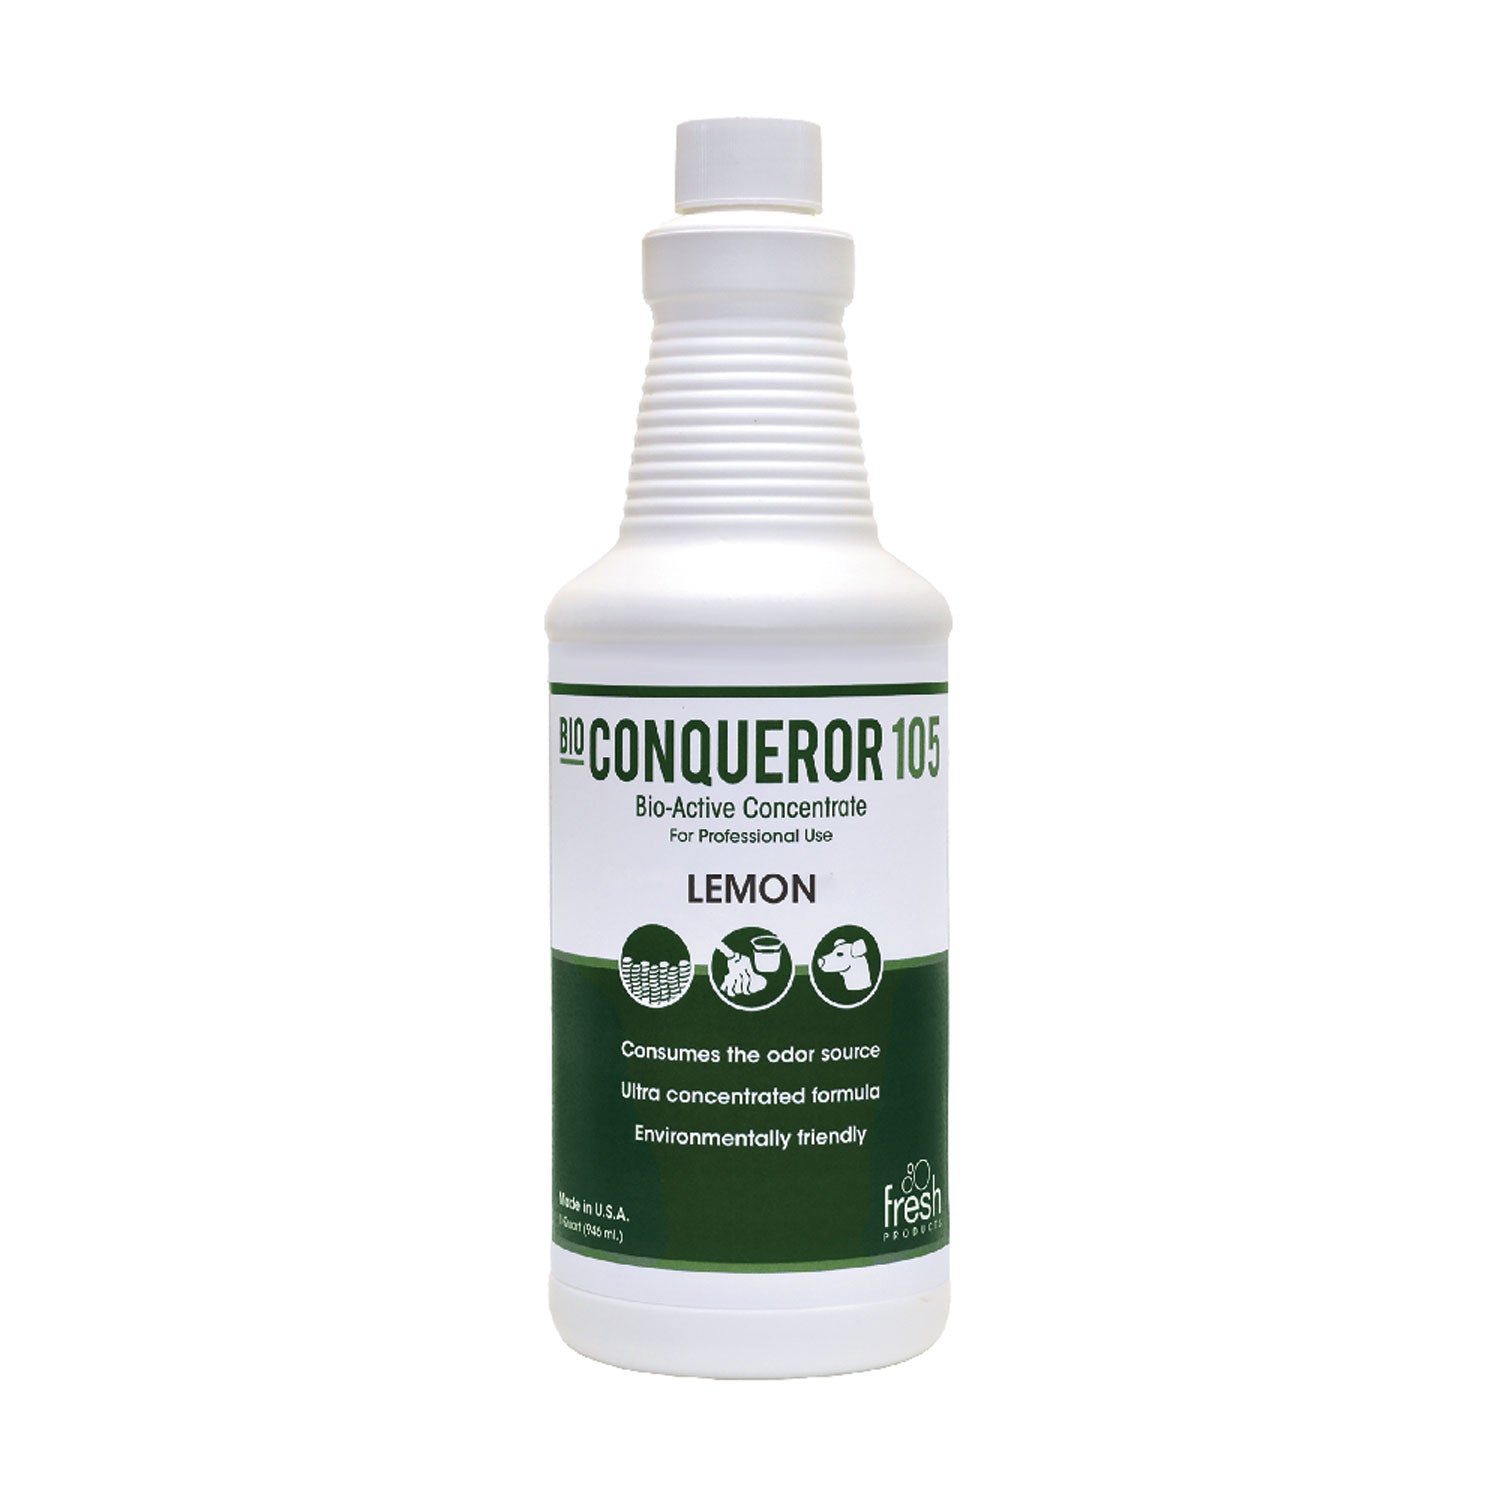 Bio Conqueror 105 Enzymatic Odor Counteractant Concentrate, Citrus, 32 oz Bottle, 12/Carton - 1